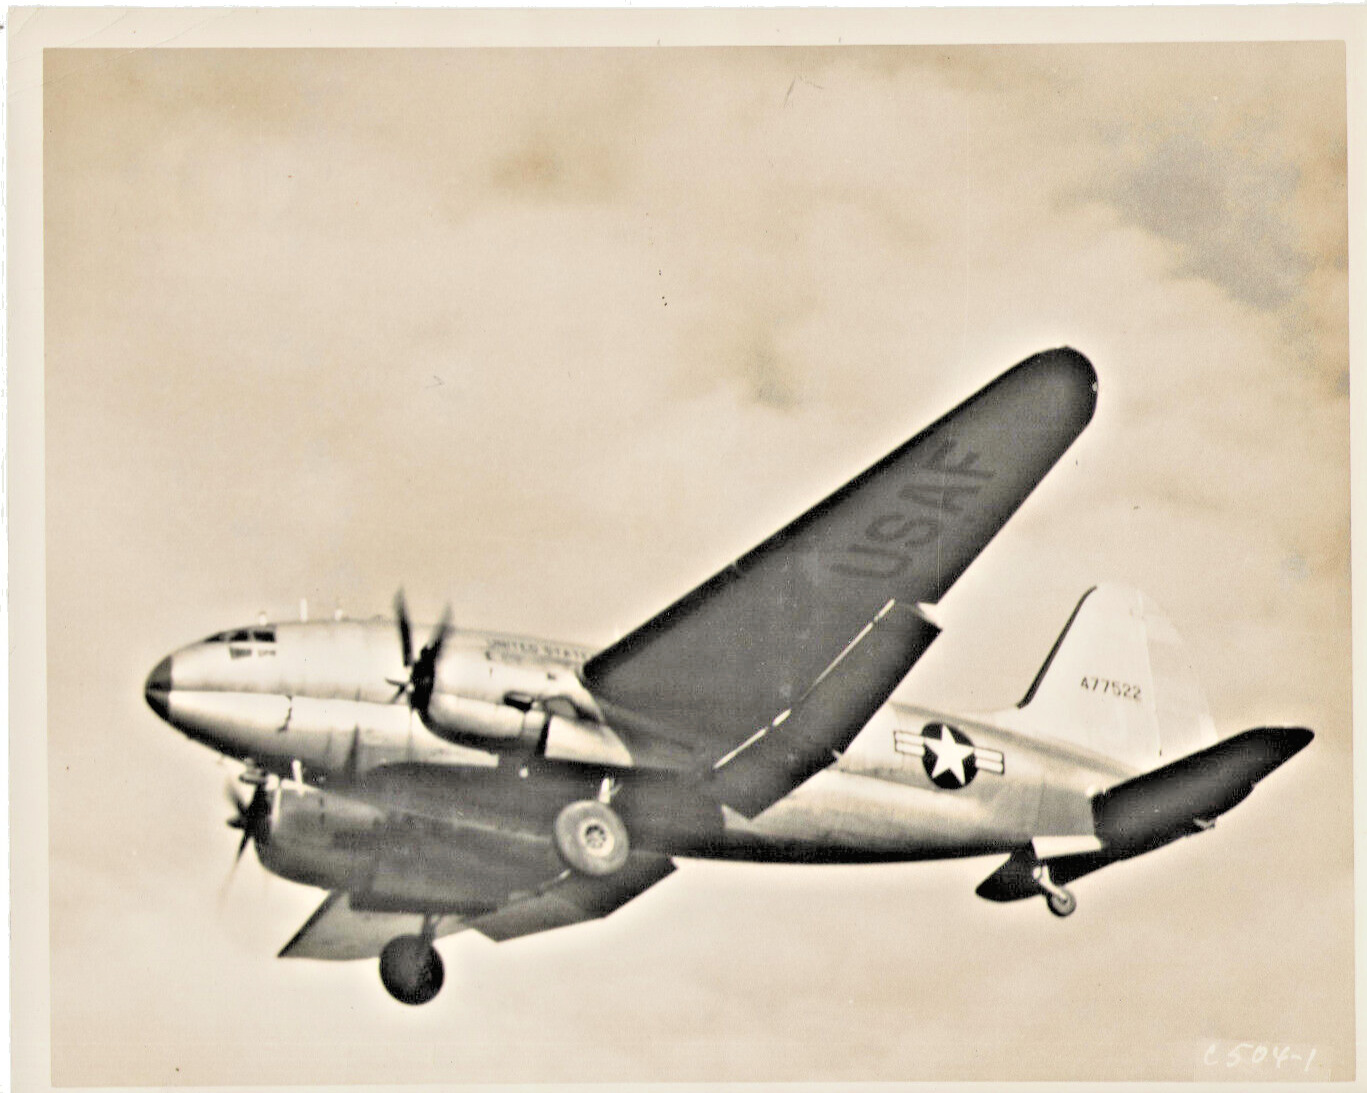 VINTAGE 1950s USAF CURTISS C-46 COMMANDO MILITARY TRANSPORT AIRCRAFT PHOTO 8x10\